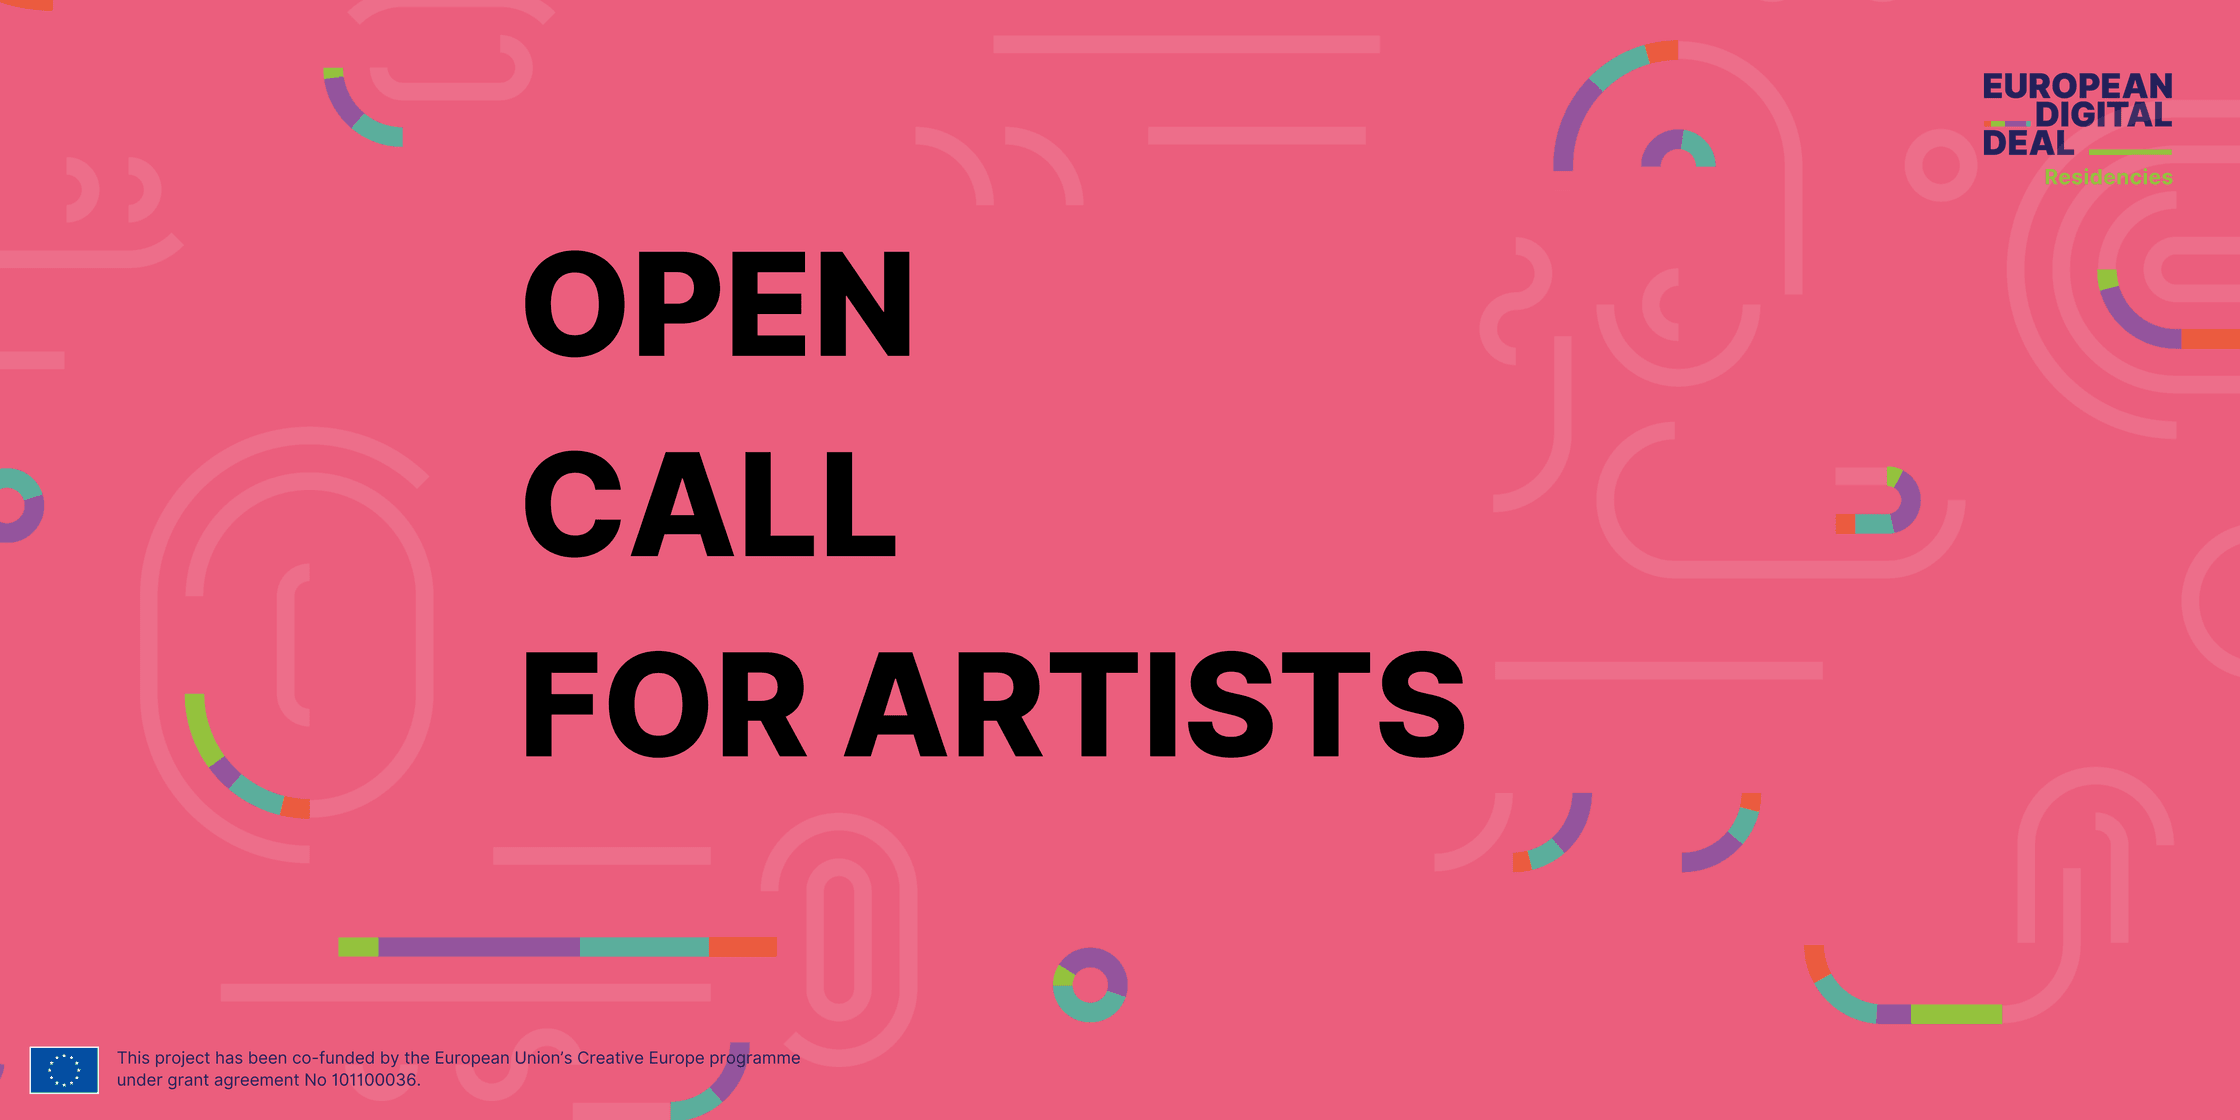 Open Call for Artists: Digital Deal